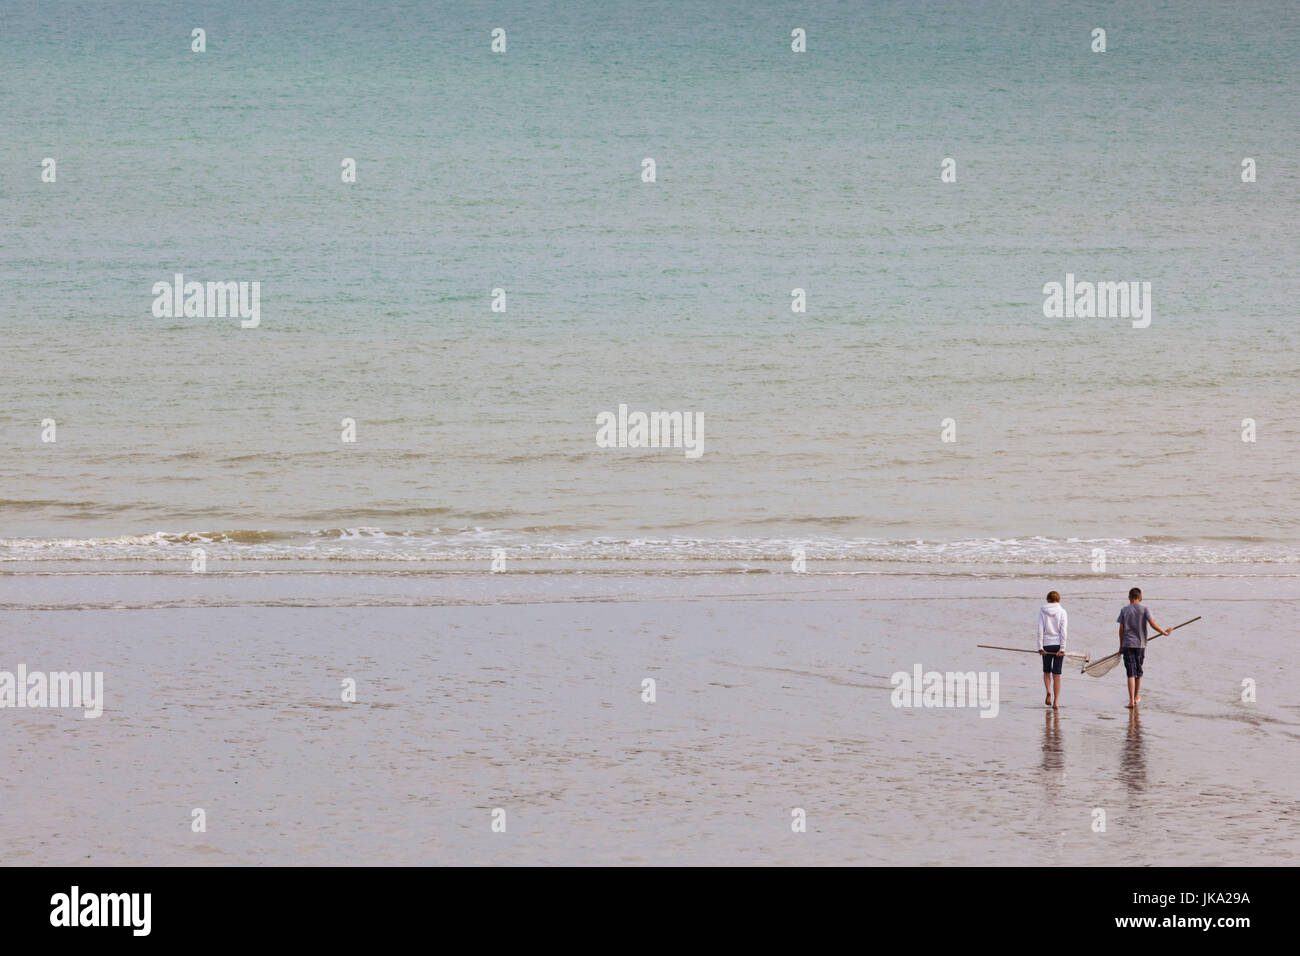 France, Normandy Region, Seine-Maritime Department, St-Valery en Caux, people on beach, NR Stock Photo